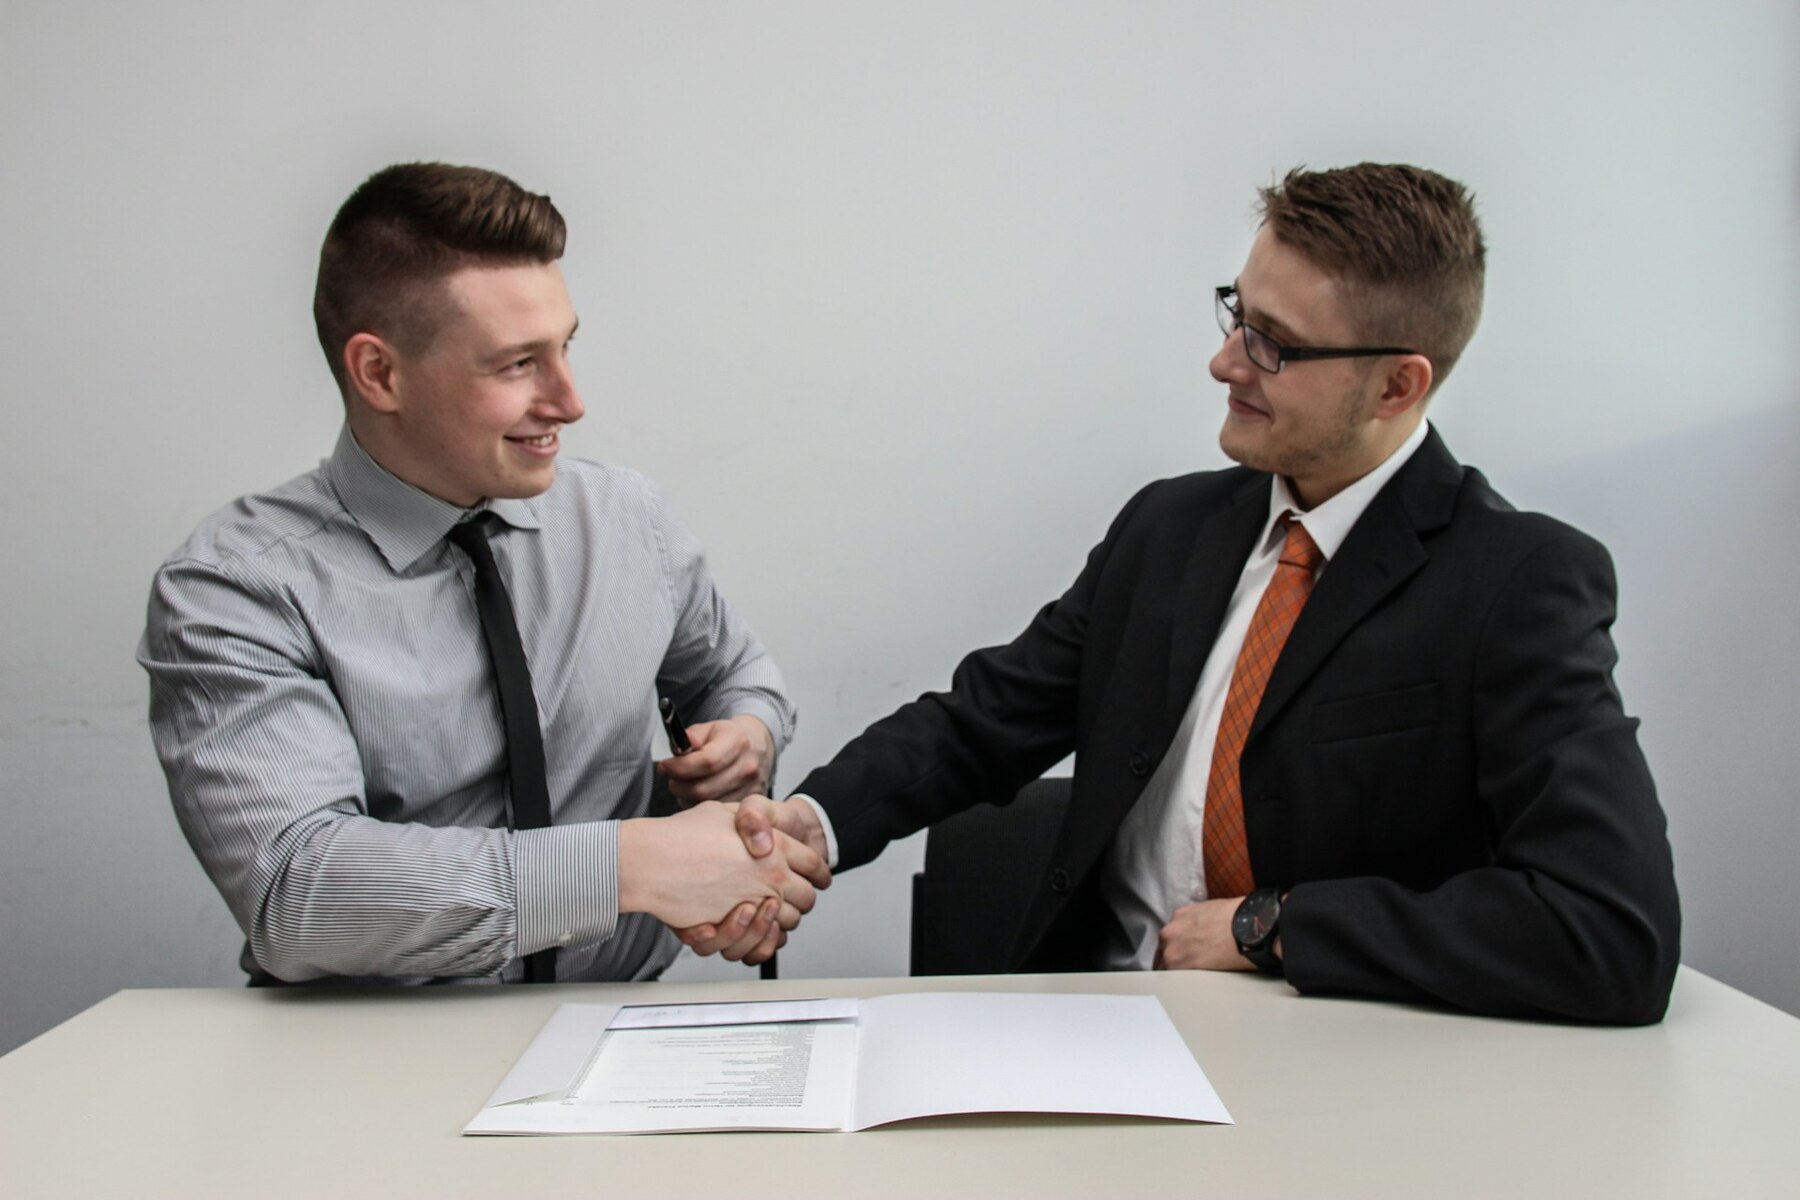 Two businessmen shaking hands at a desk